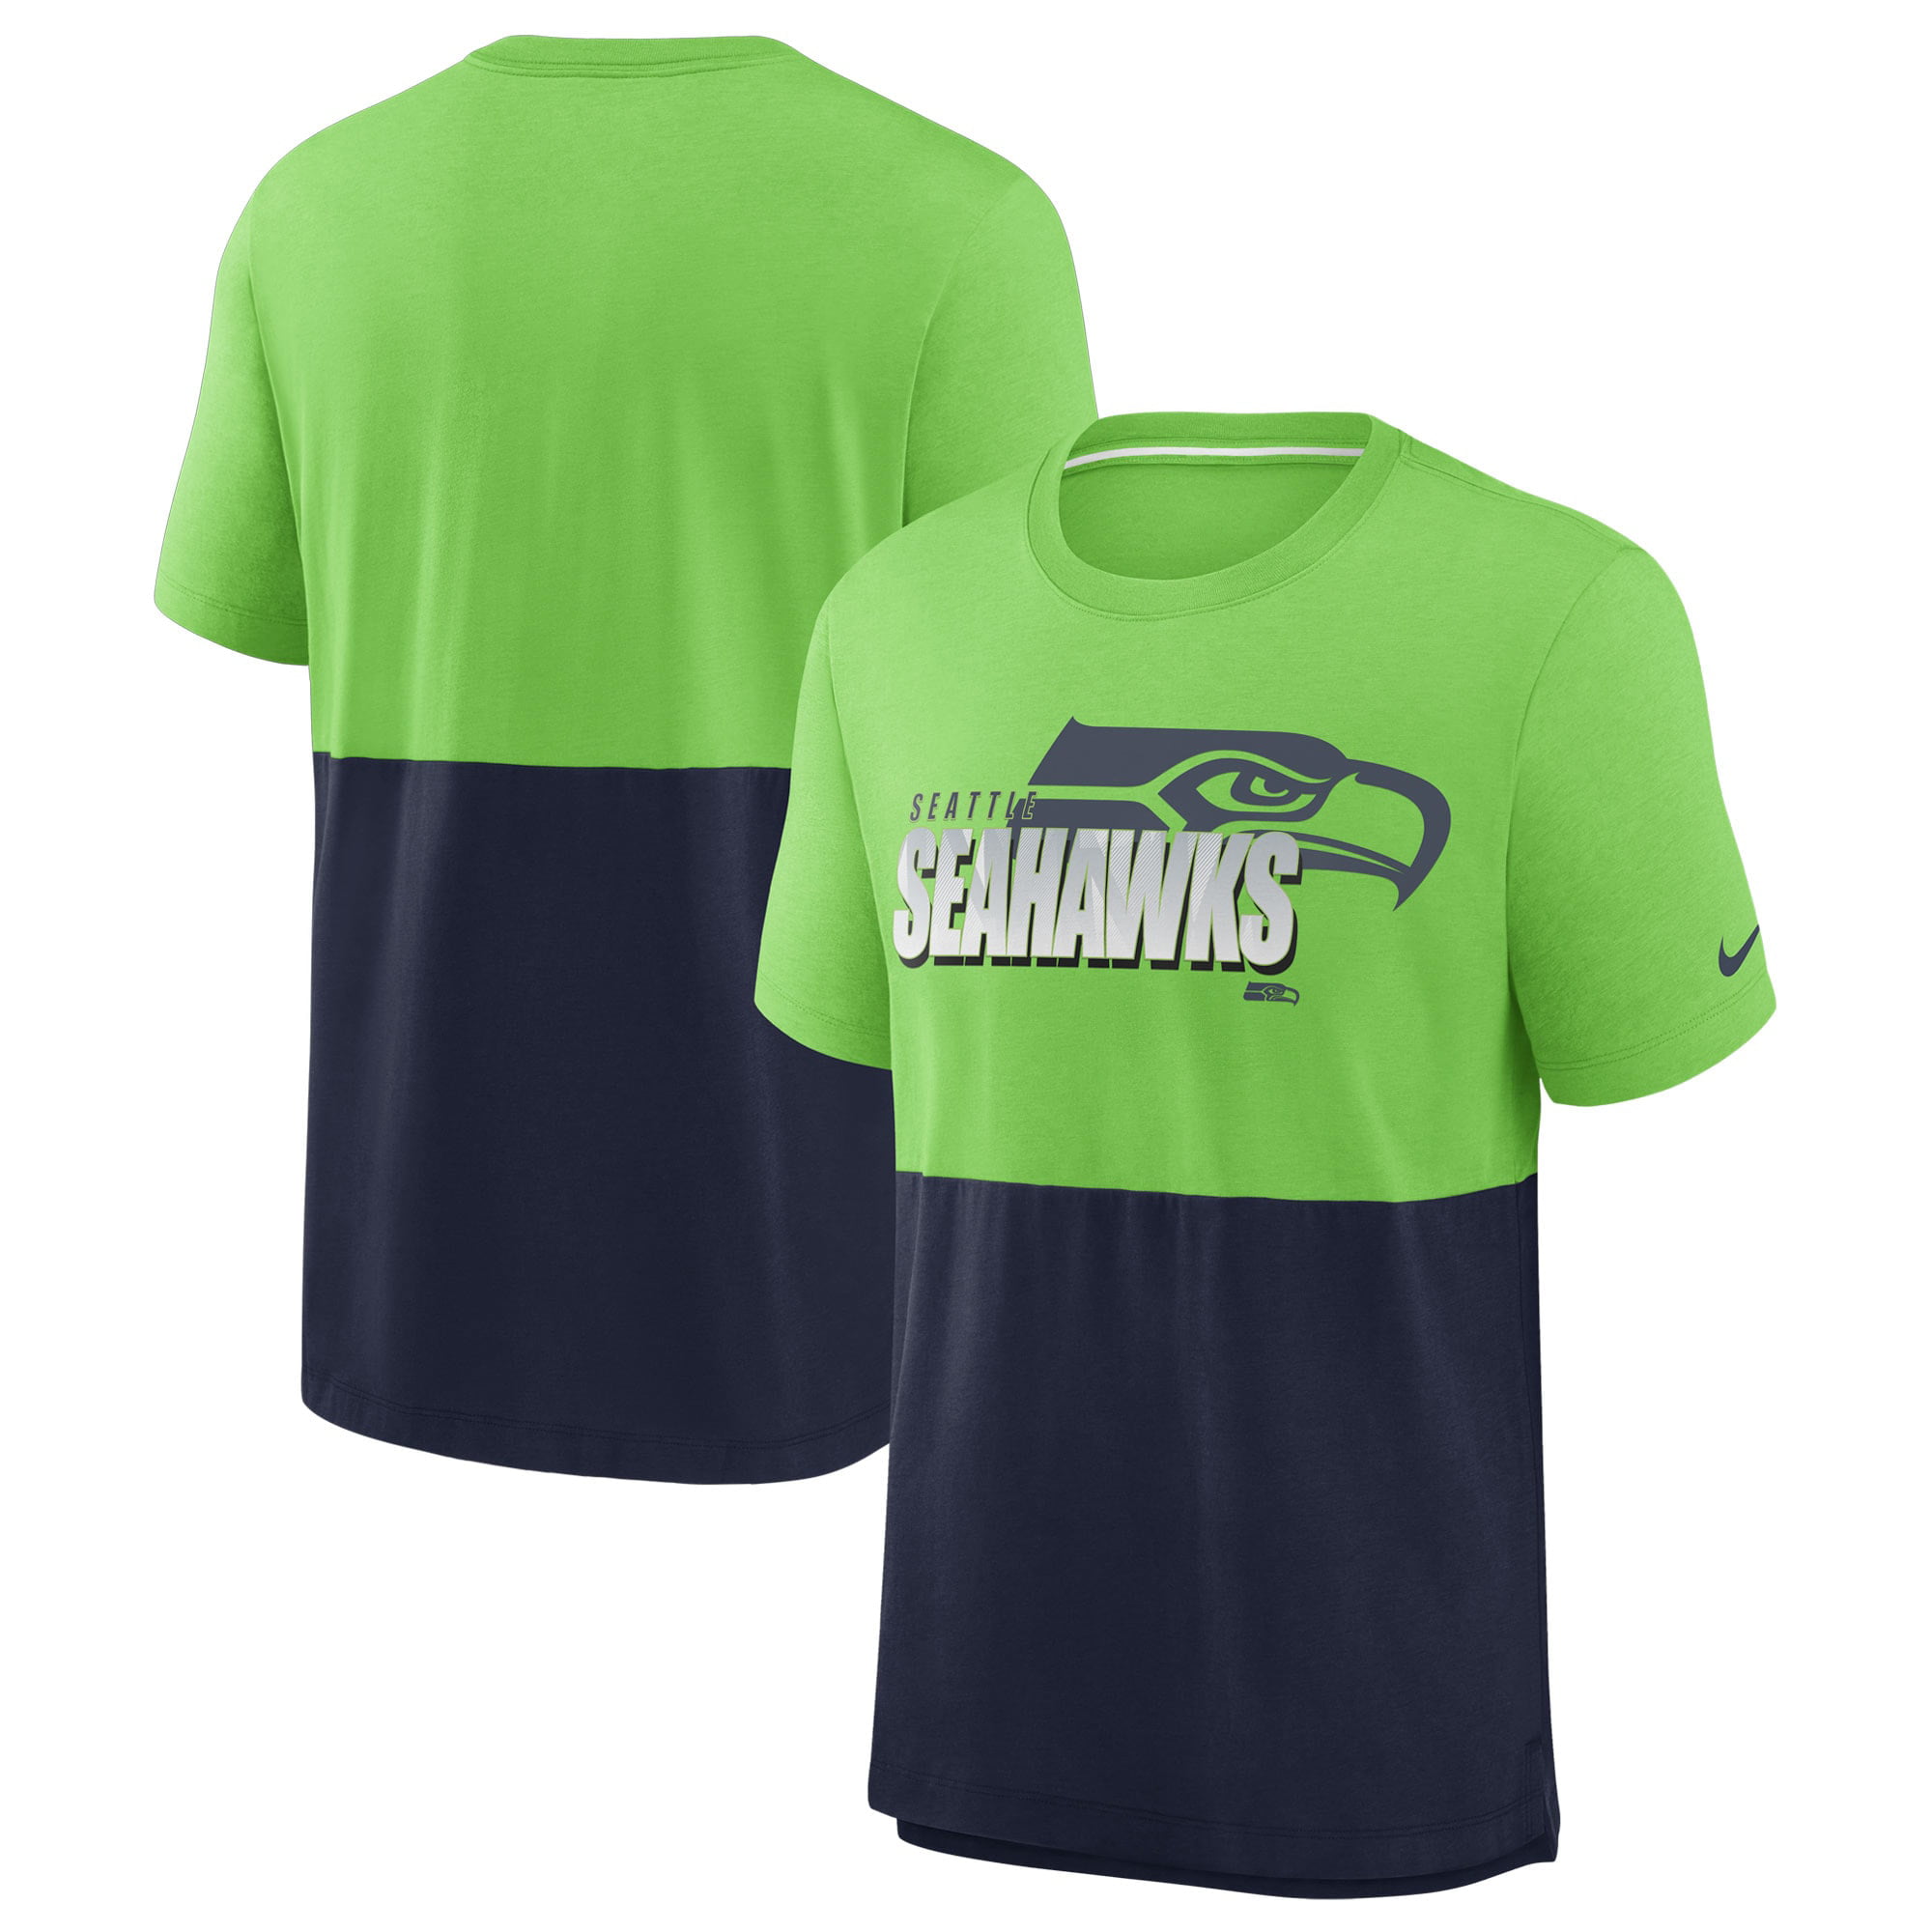 seahawks green t shirt